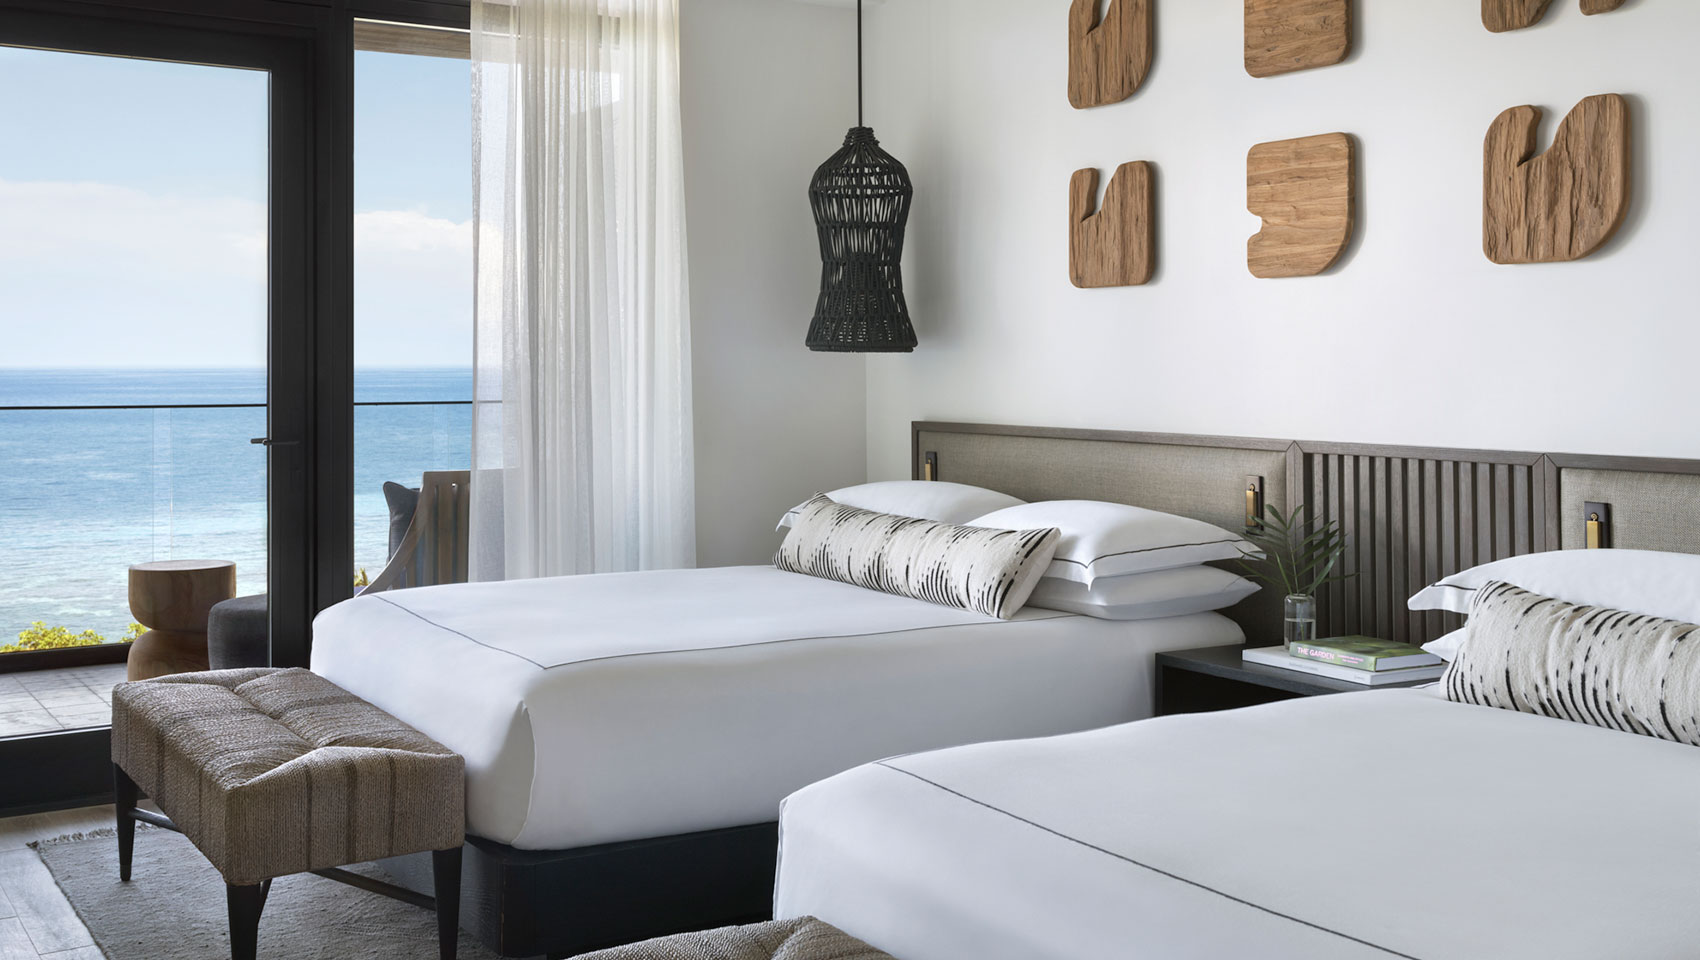 Guestroom with ocean view